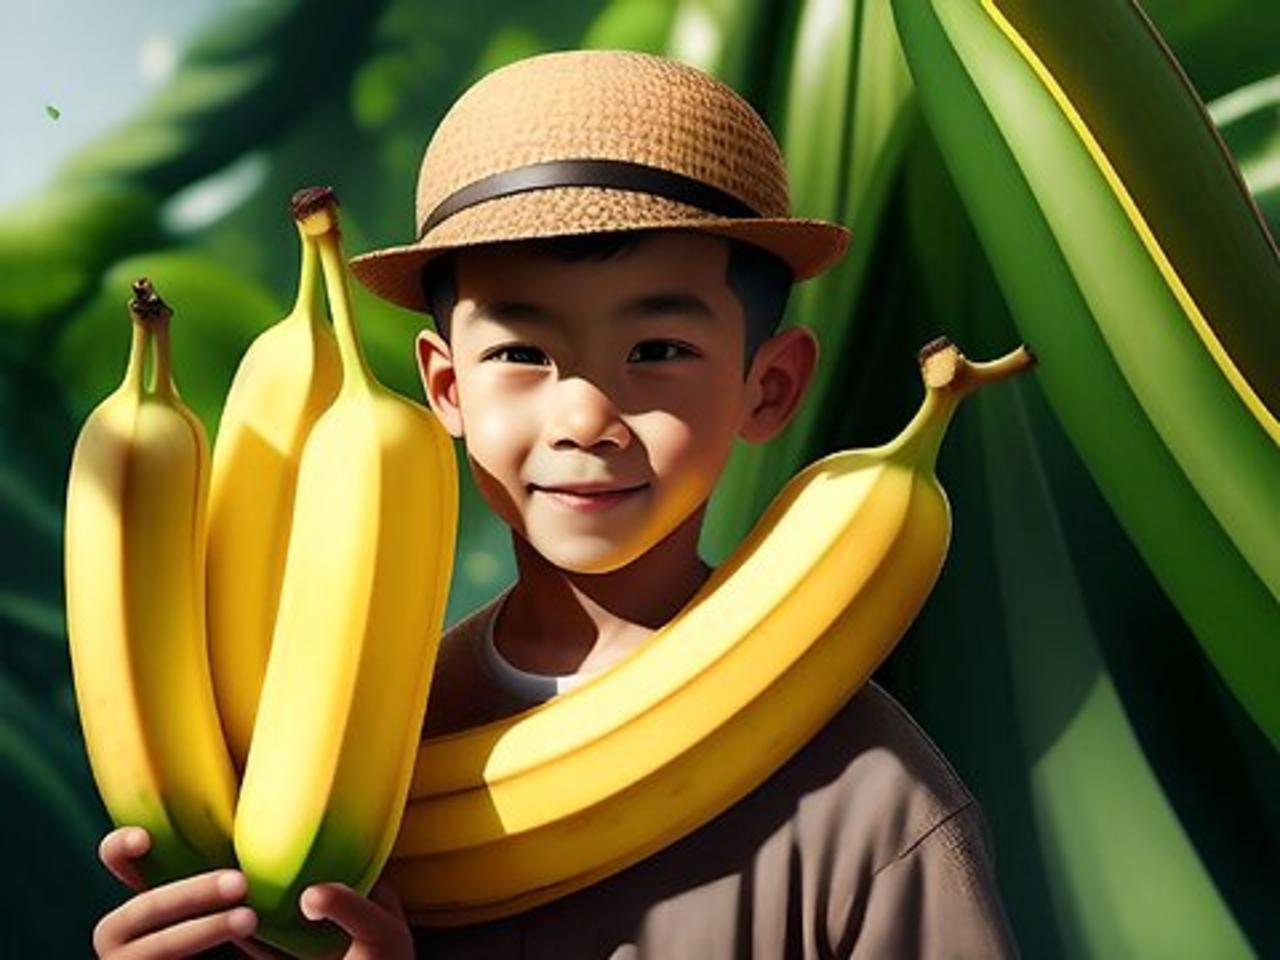 "The Banana Boy - A Powerful Life Lesson"